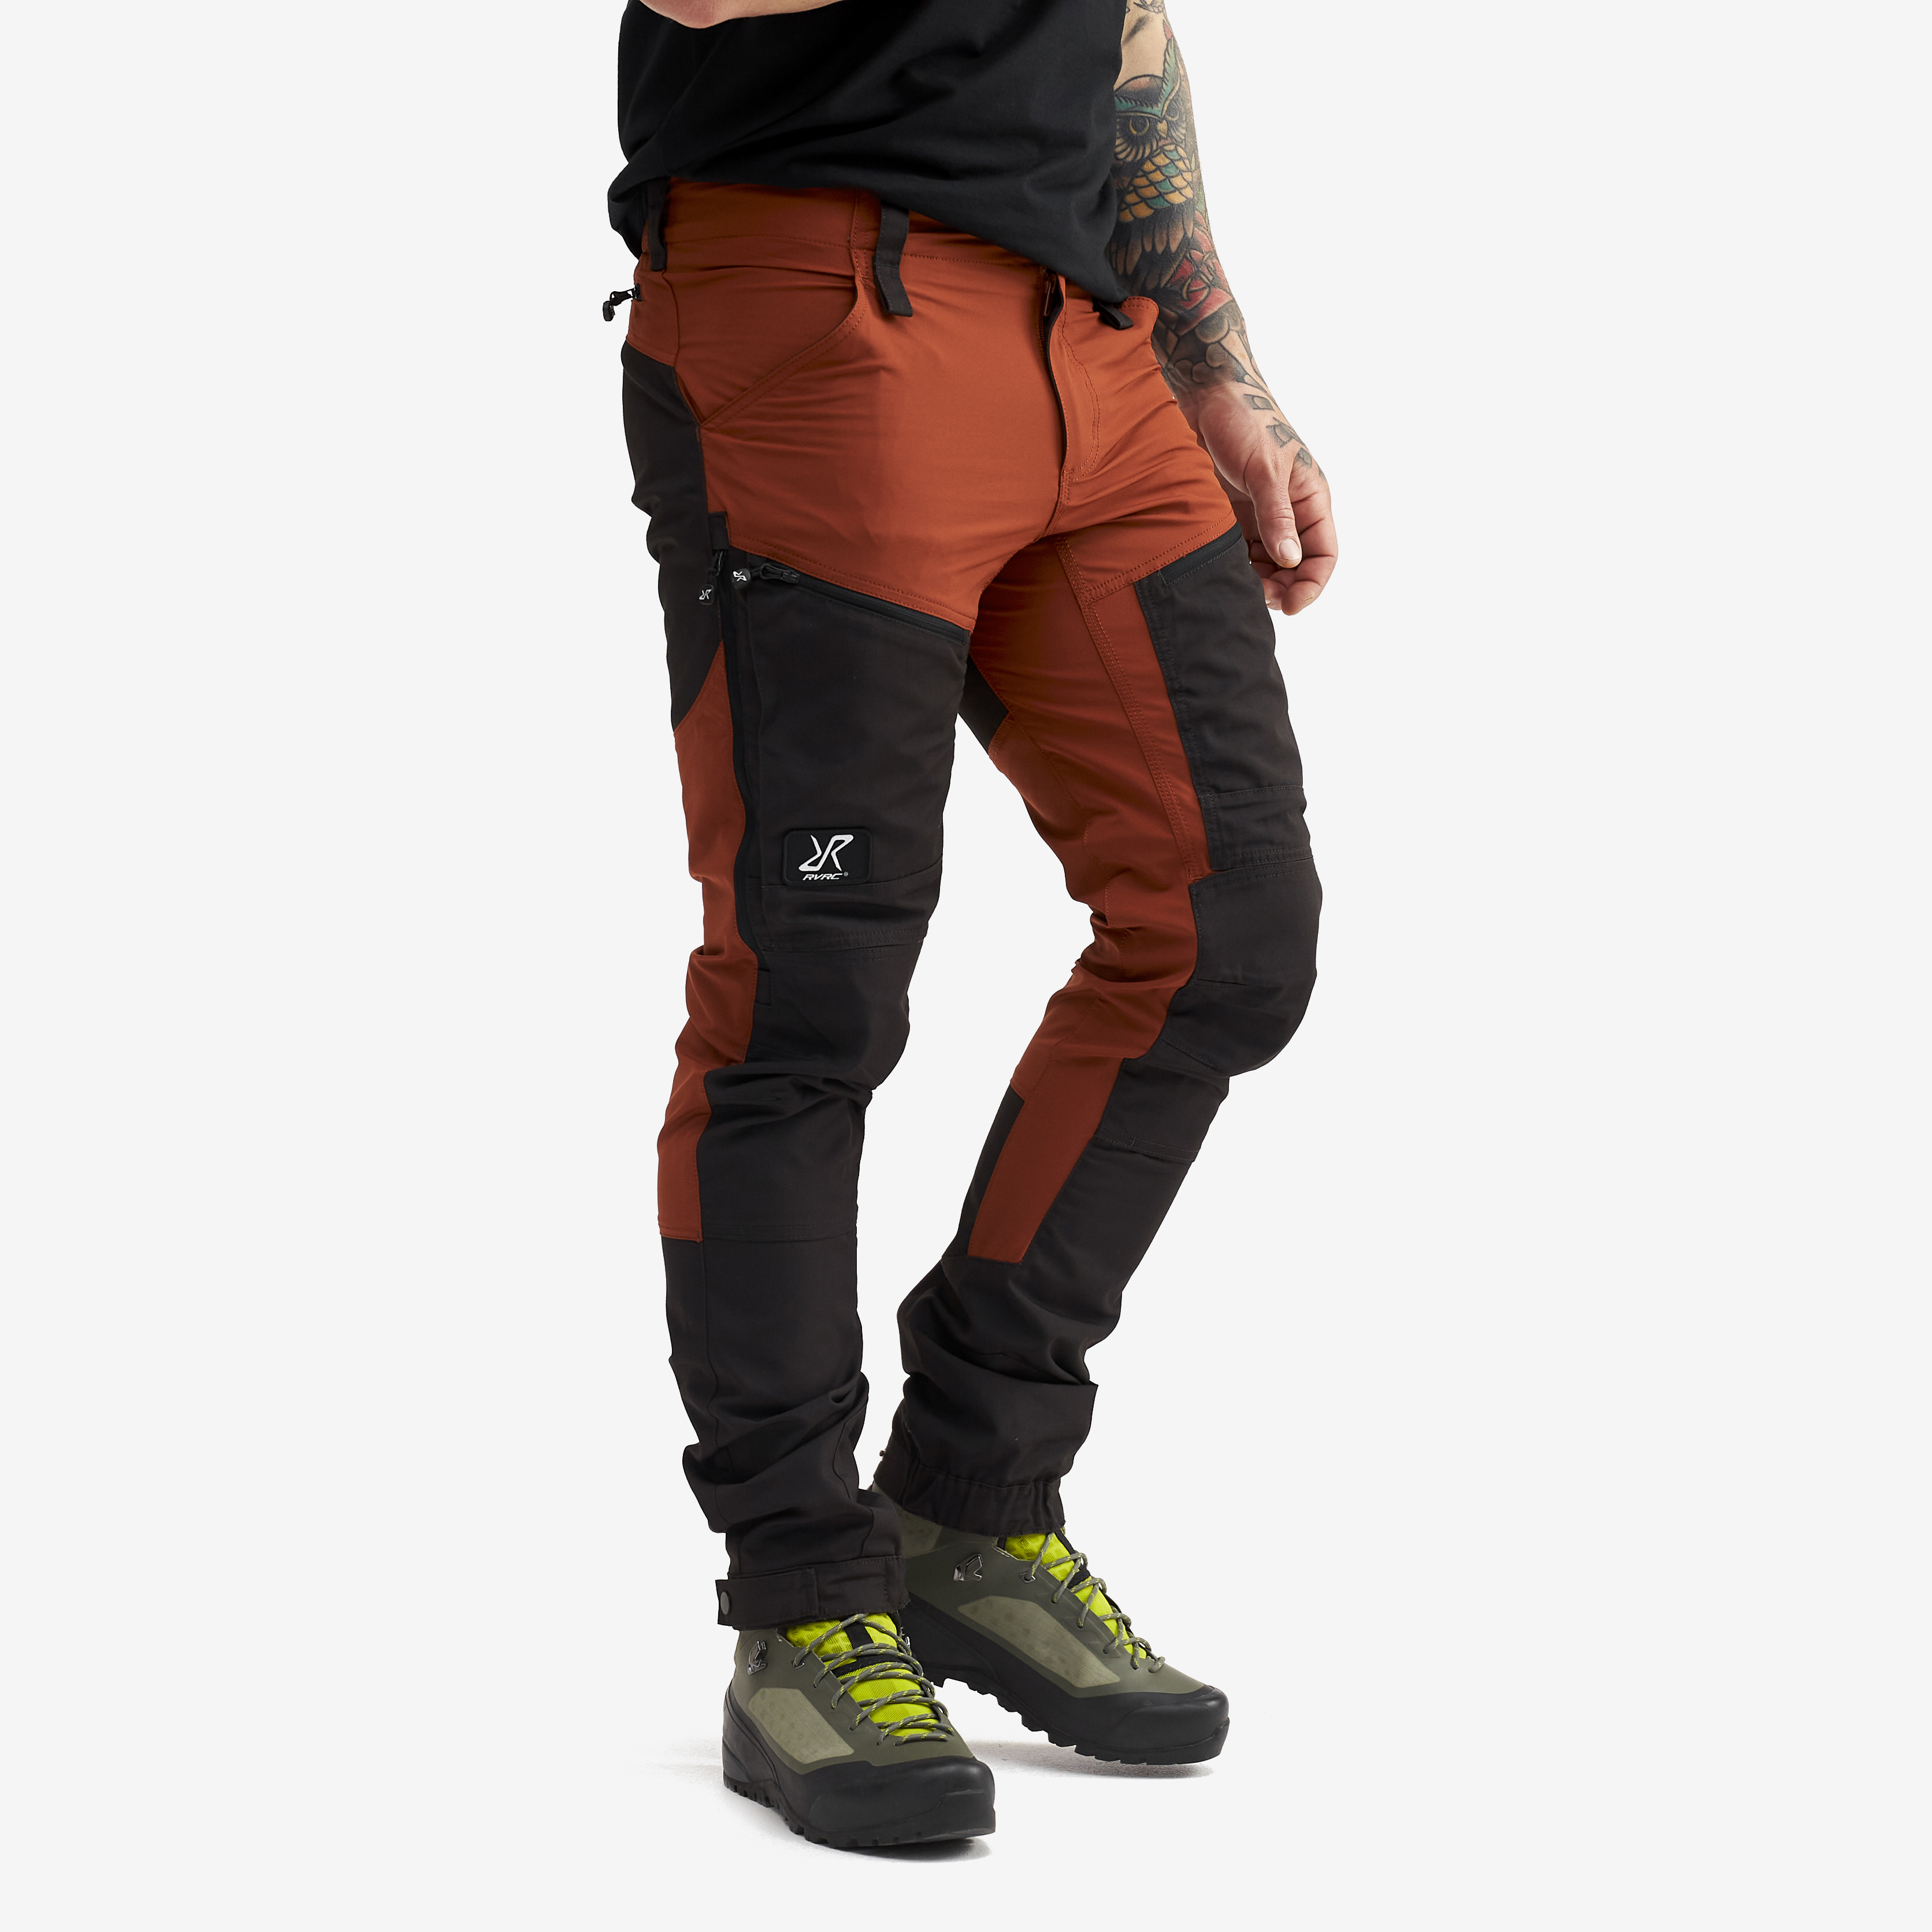 RVRC GP Pro hiking pants for men in orange